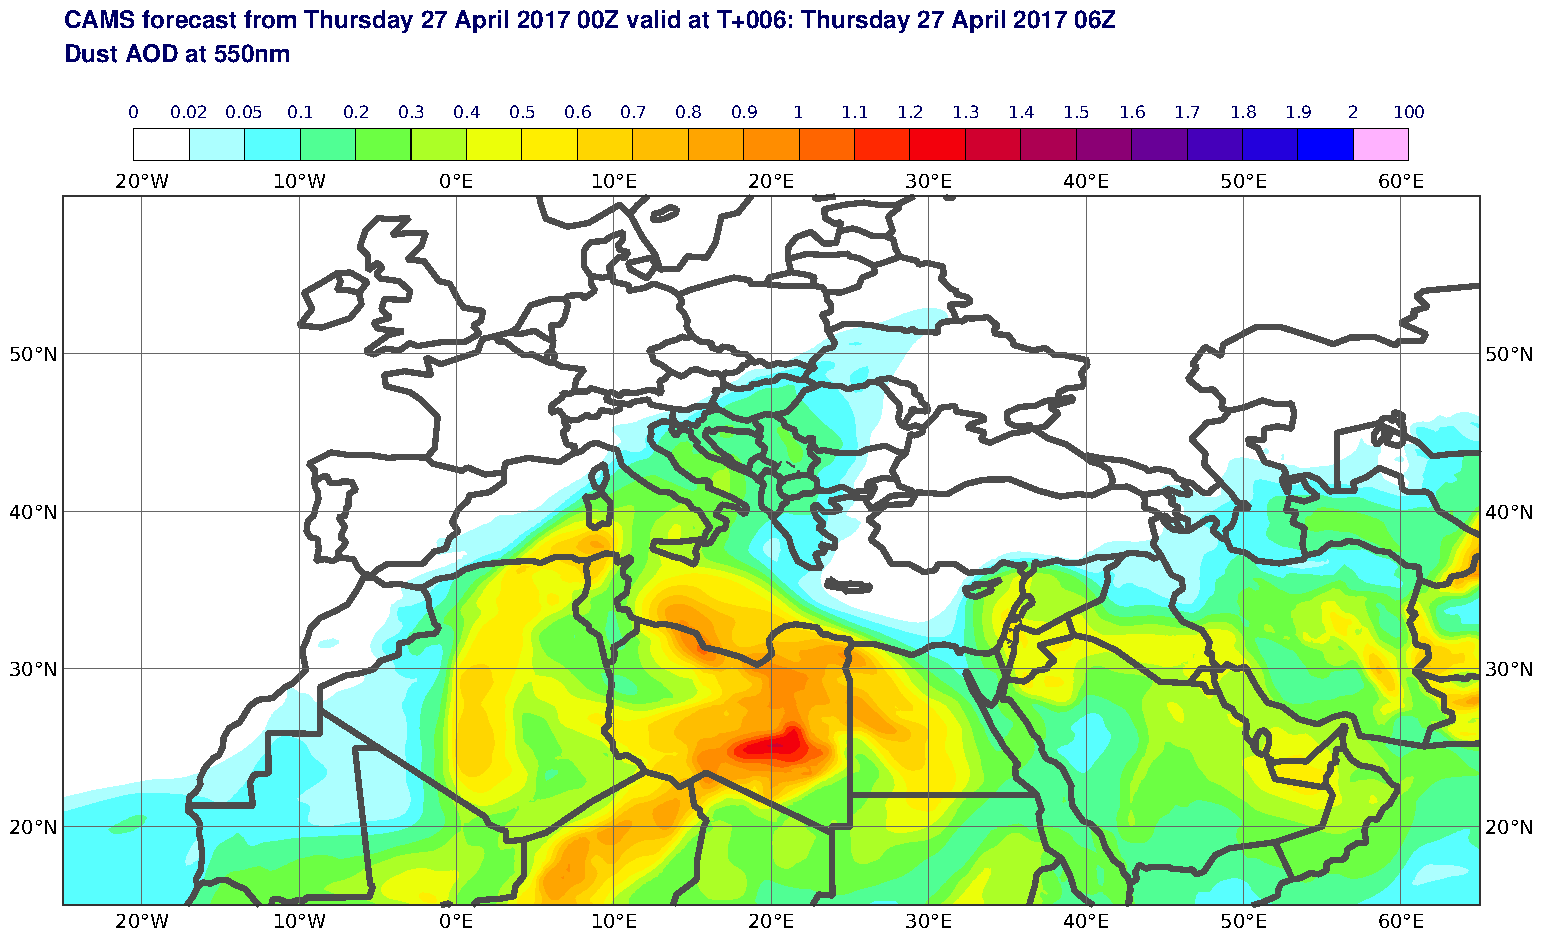 Dust AOD at 550nm valid at T6 - 2017-04-27 06:00